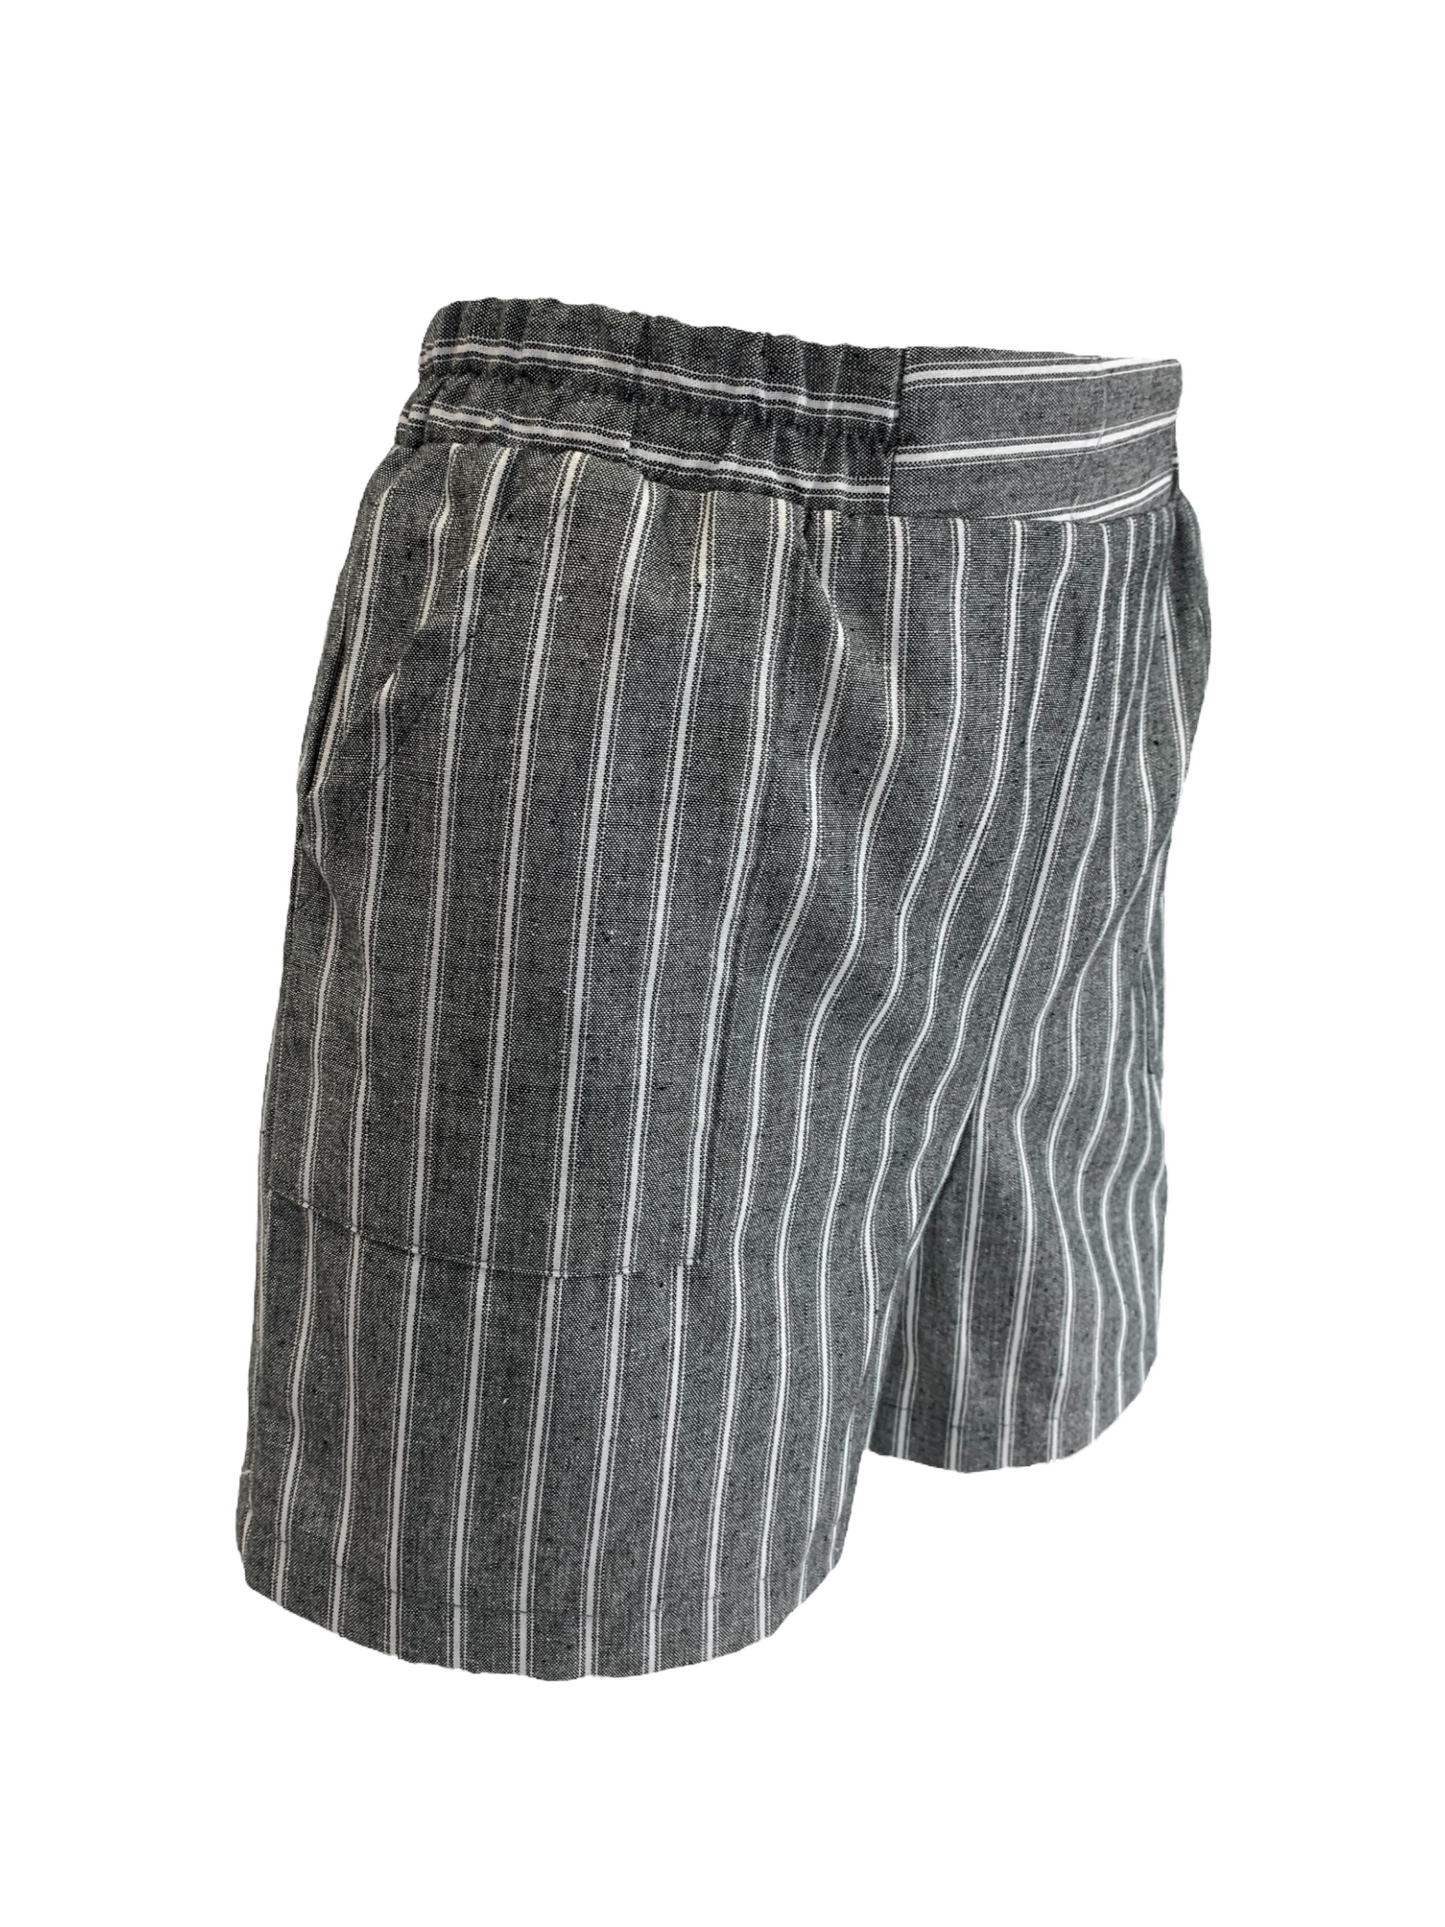 Light gray women's shorts